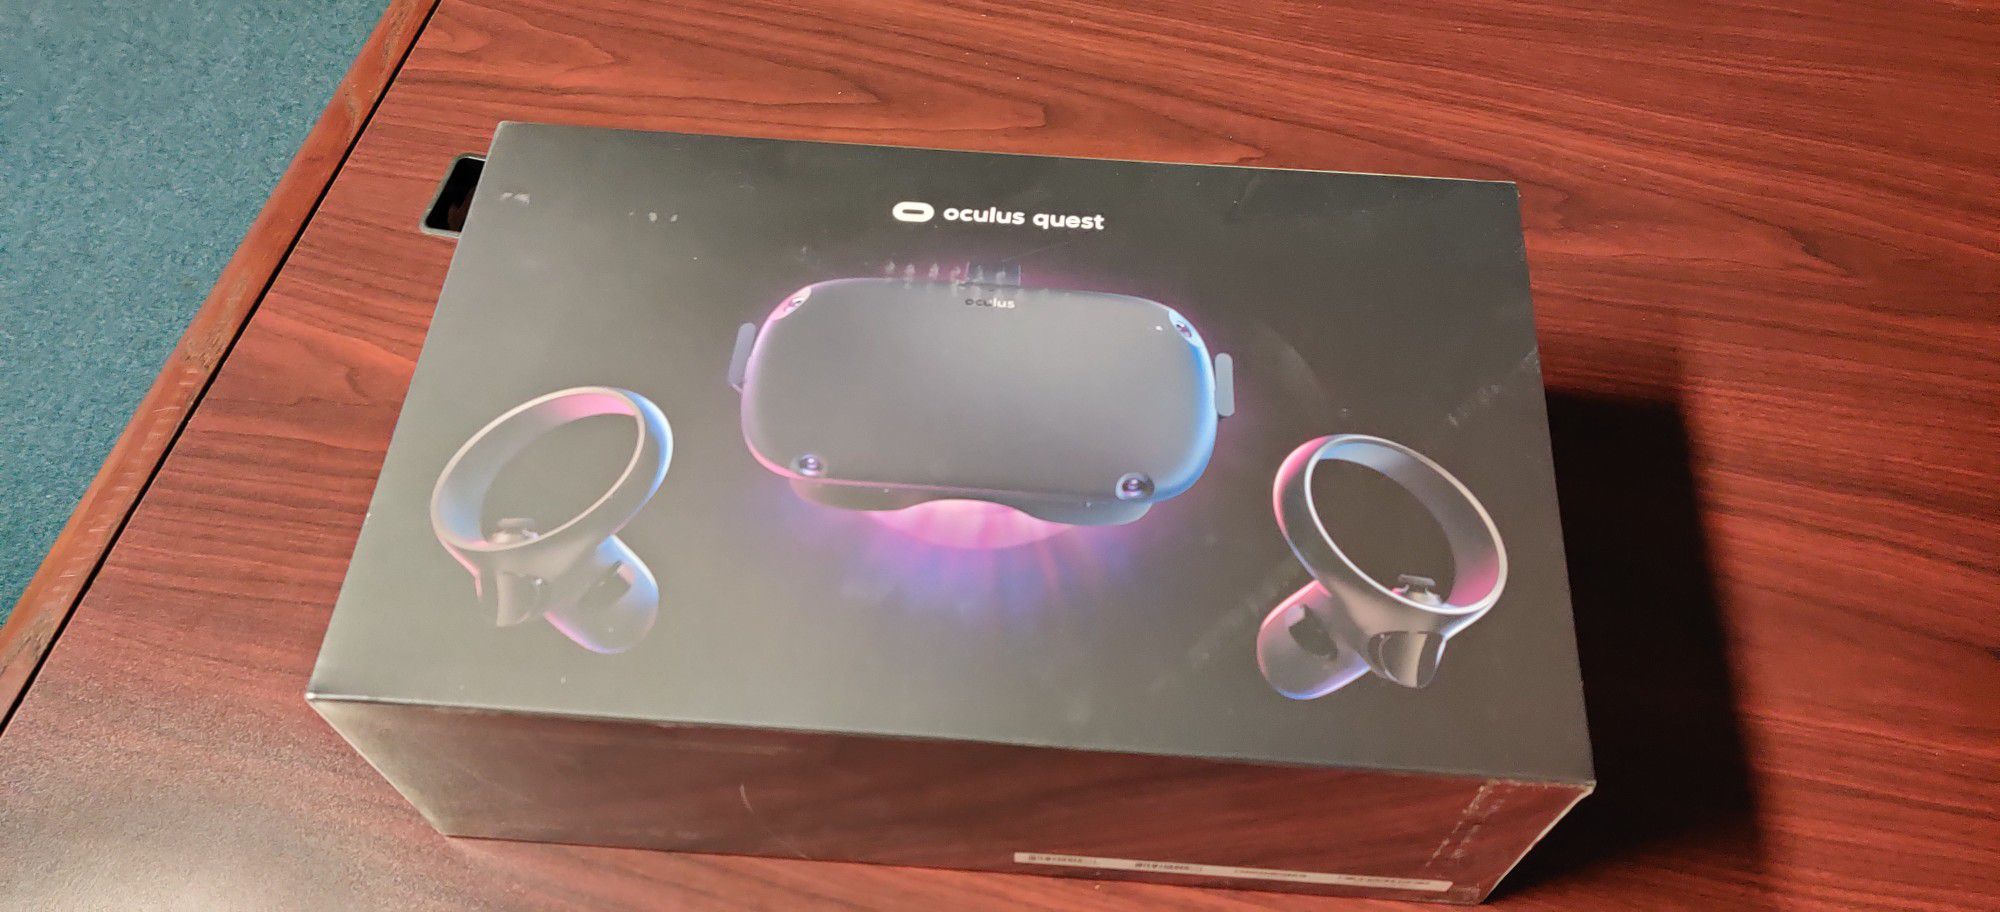 Oculus Quest 128GB - Brand New, Unopened, still sealed in plastic